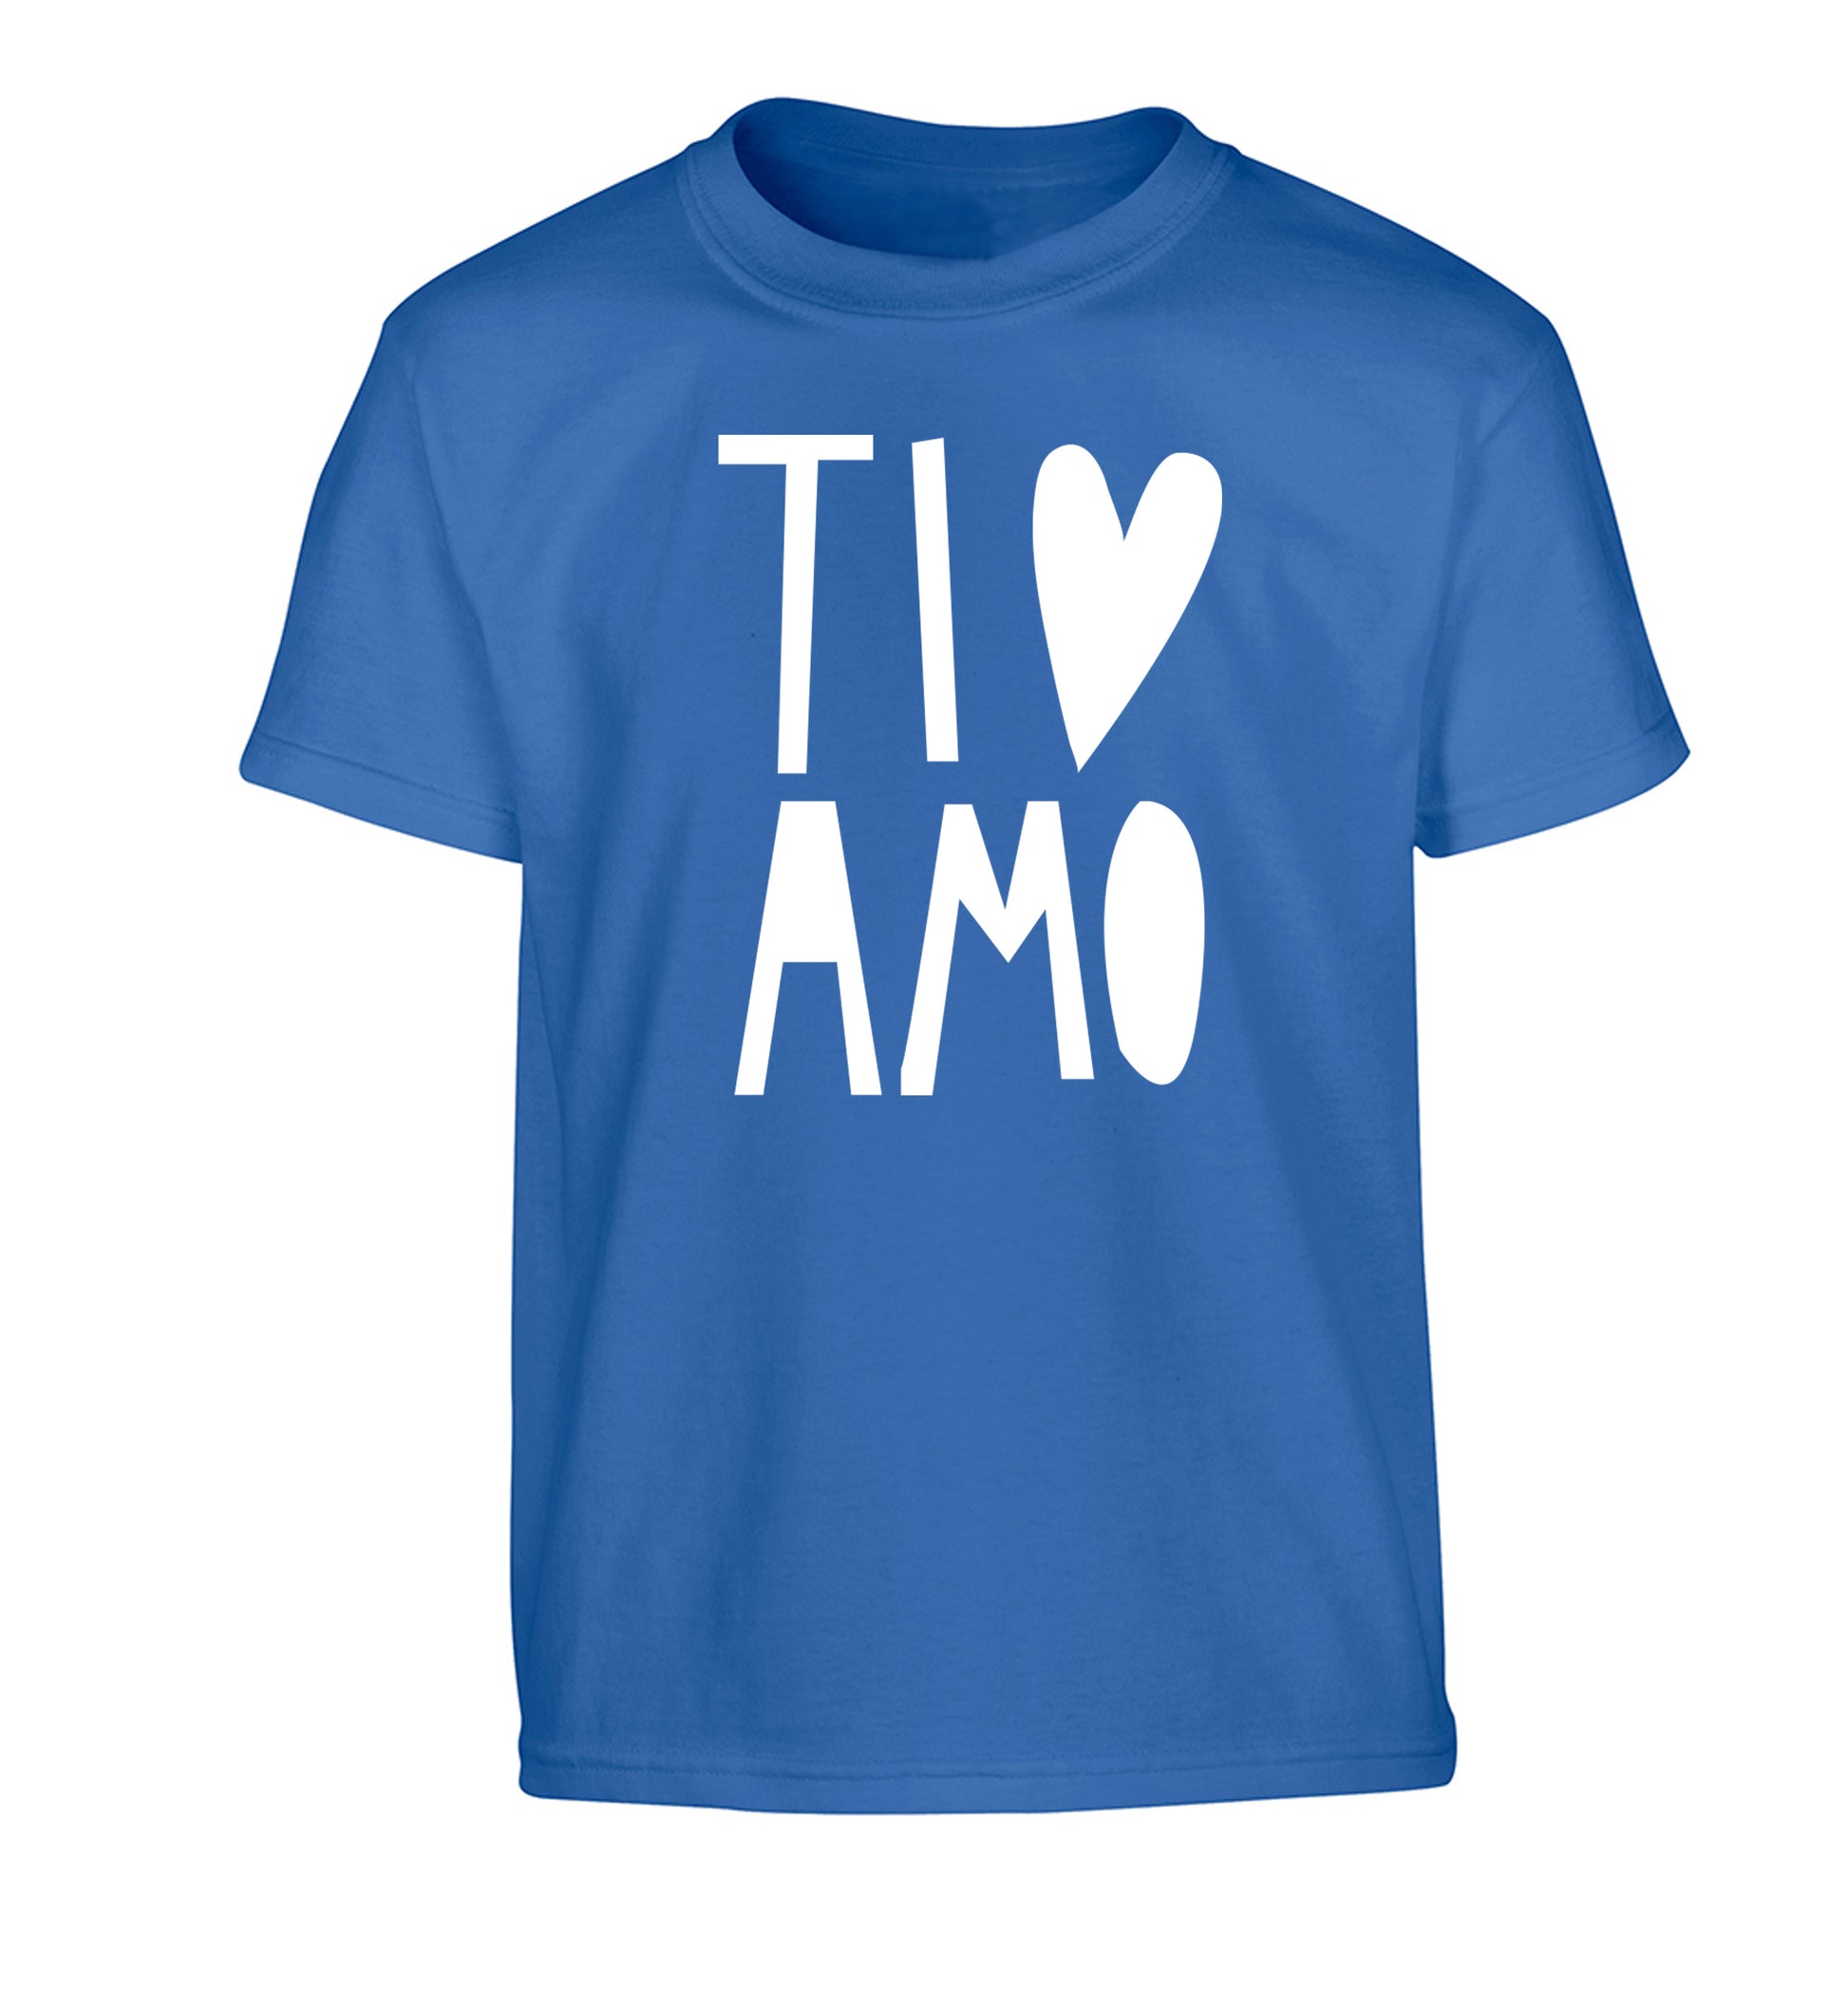 Ti amo - I love you Children's blue Tshirt 12-13 Years